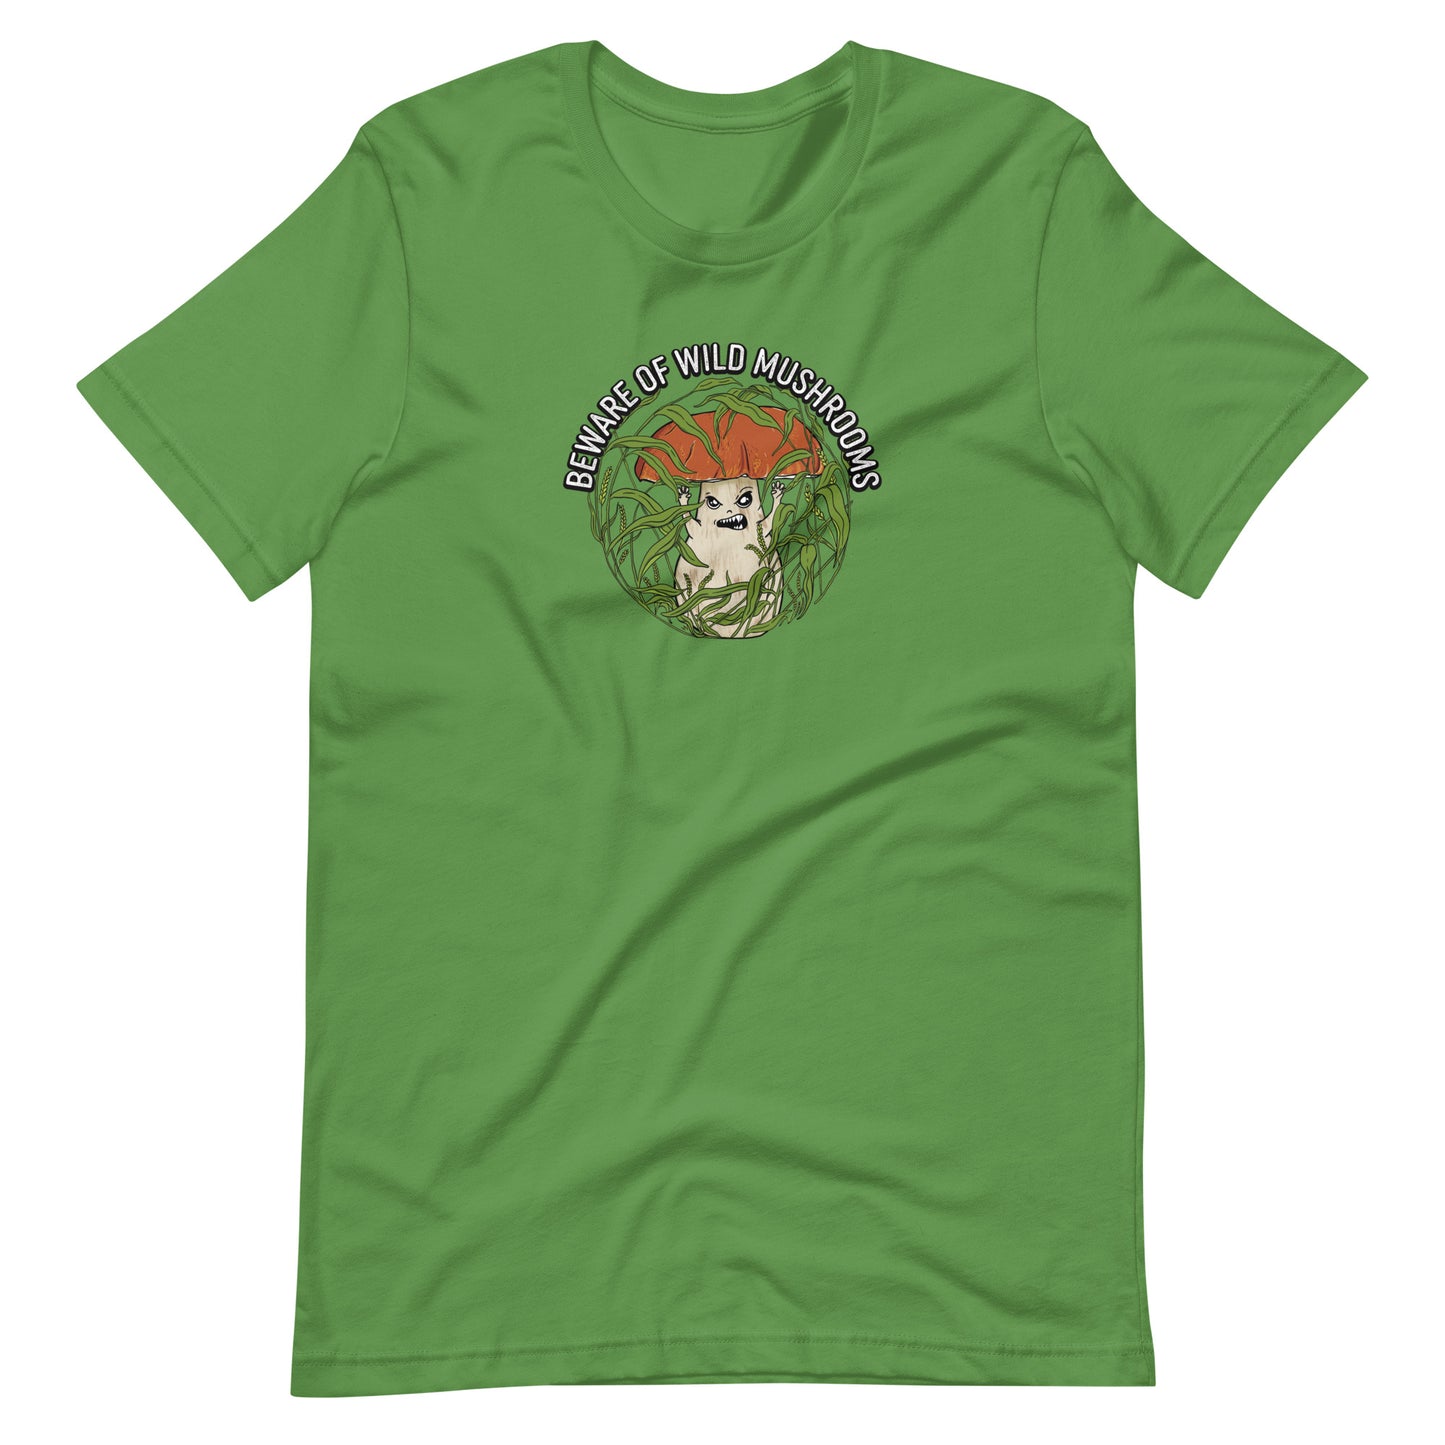 Beware Of Wild Mushrooms | Unisex T-Shirt | Funny Mushroom Apparel